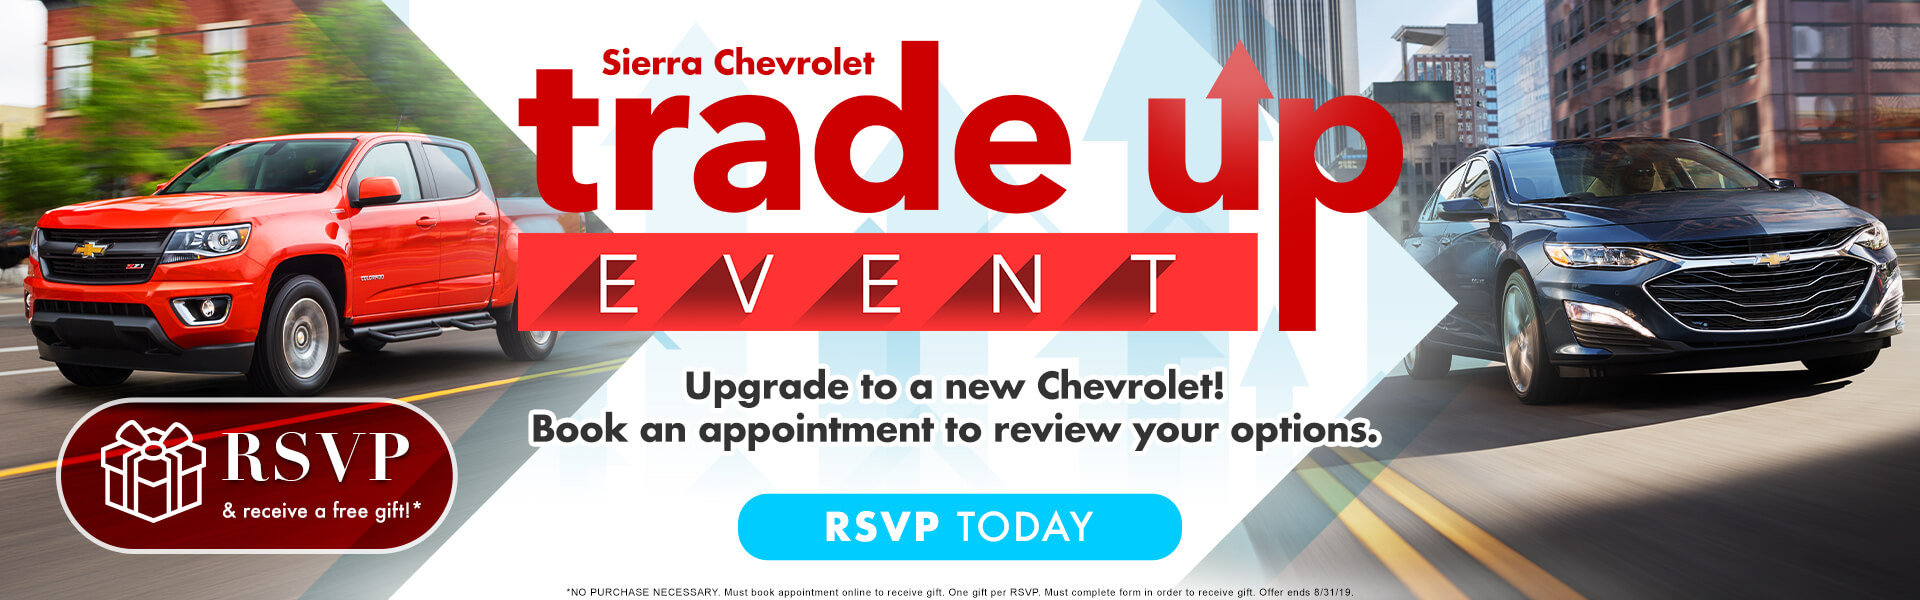 Sierra Chevrolet Trade Up Event